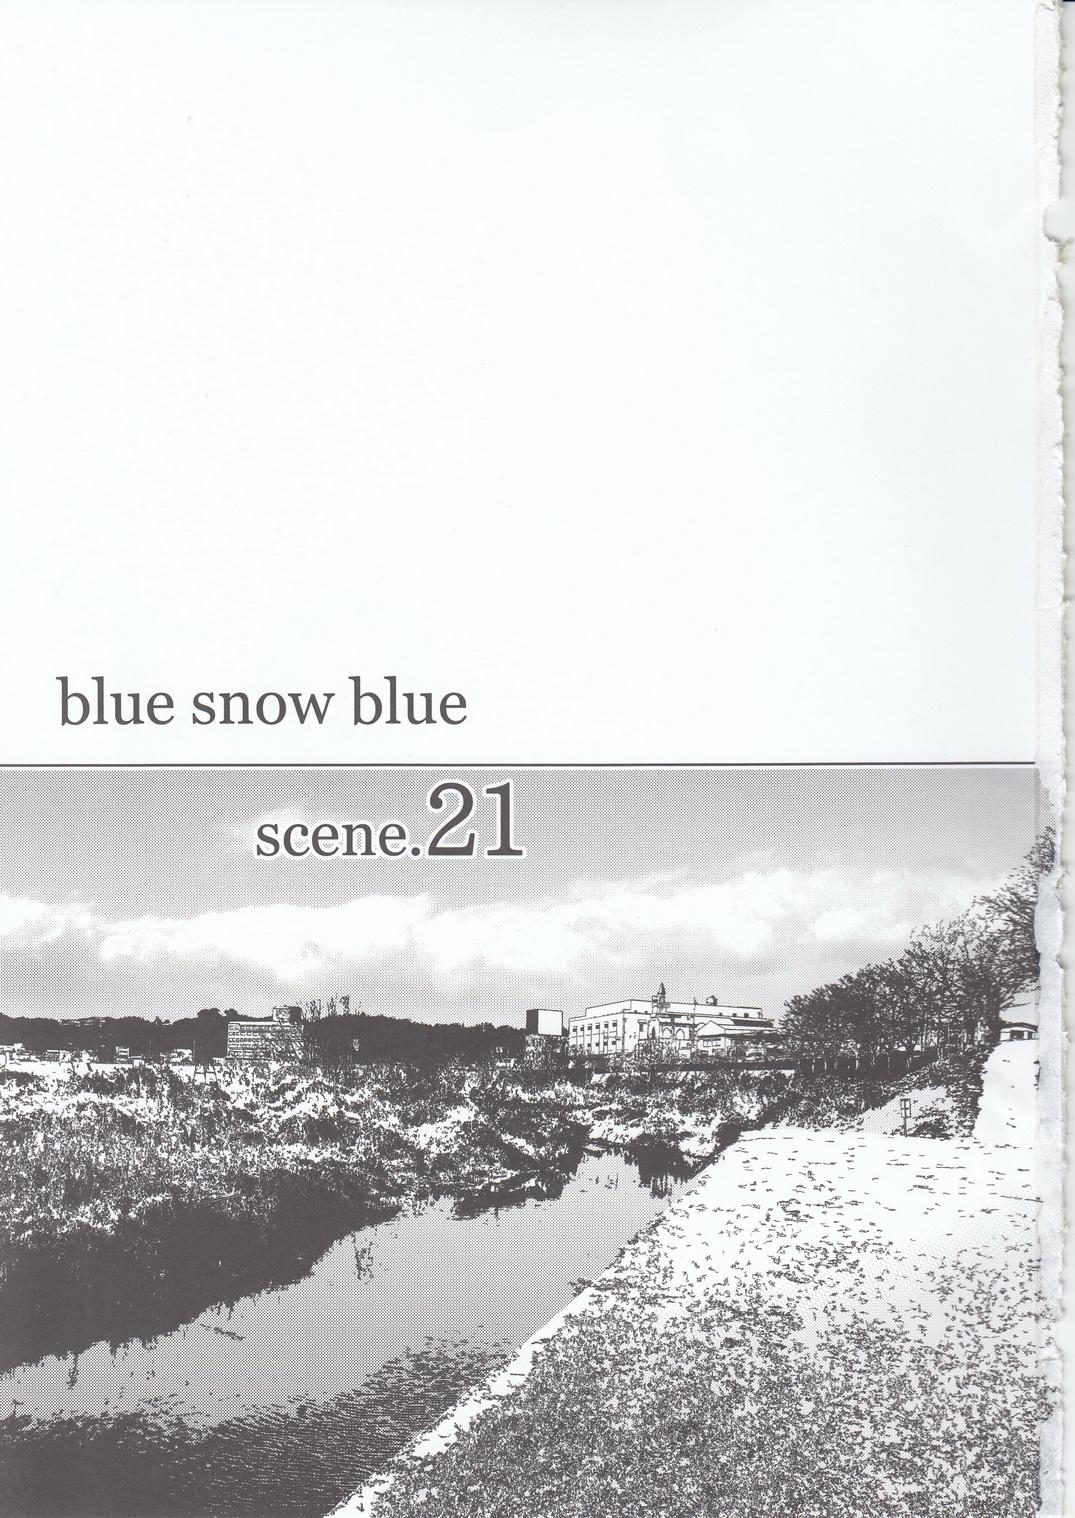 blue snow blue scene.21 2